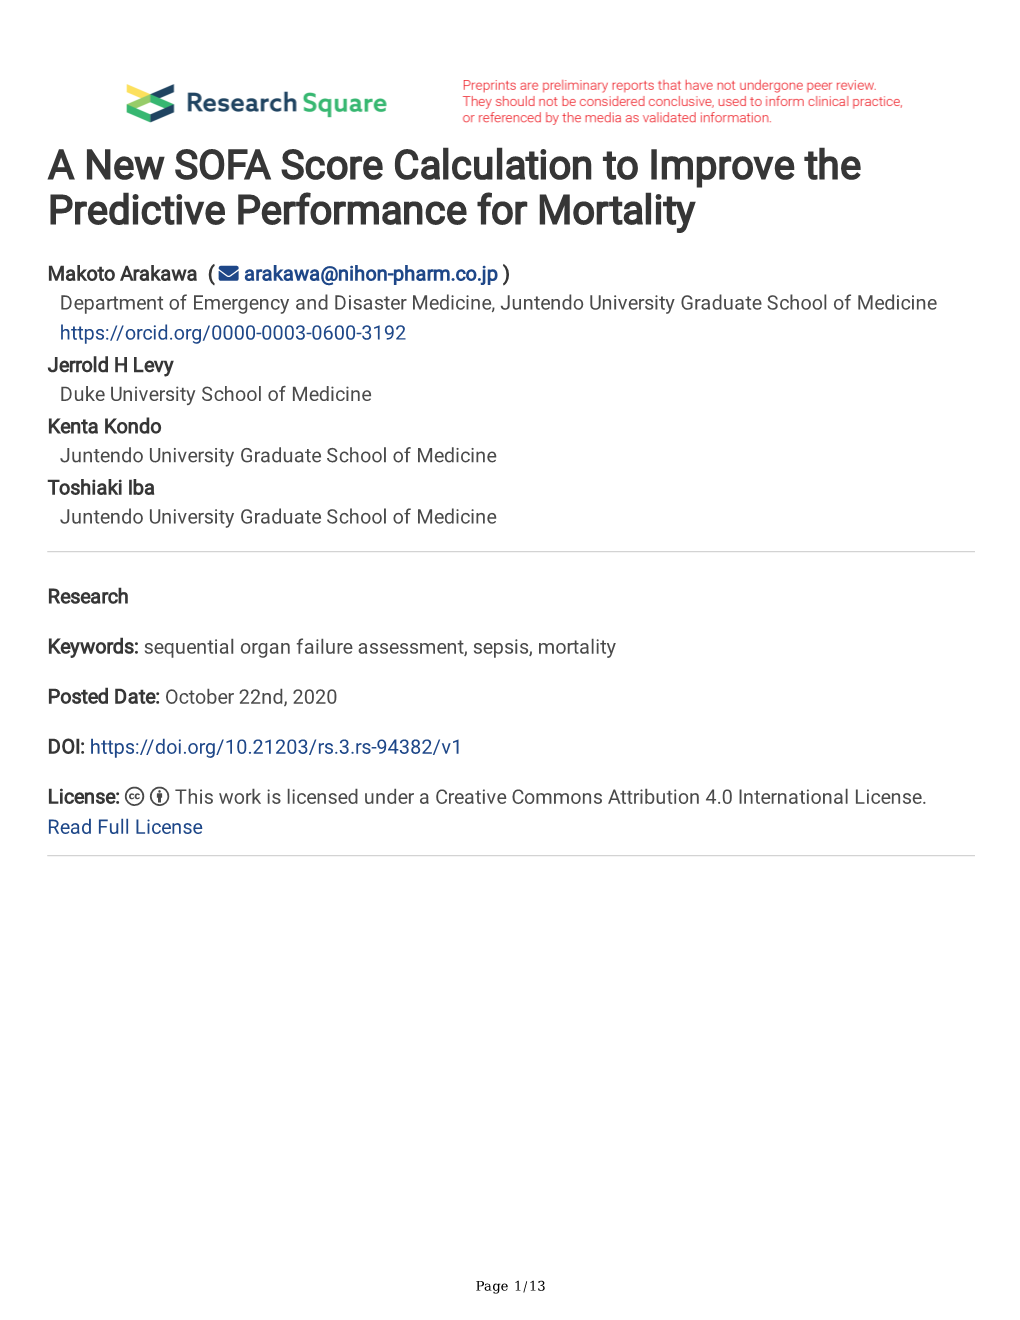 A New SOFA Score Calculation to Improve the Predictive Performance for Mortality